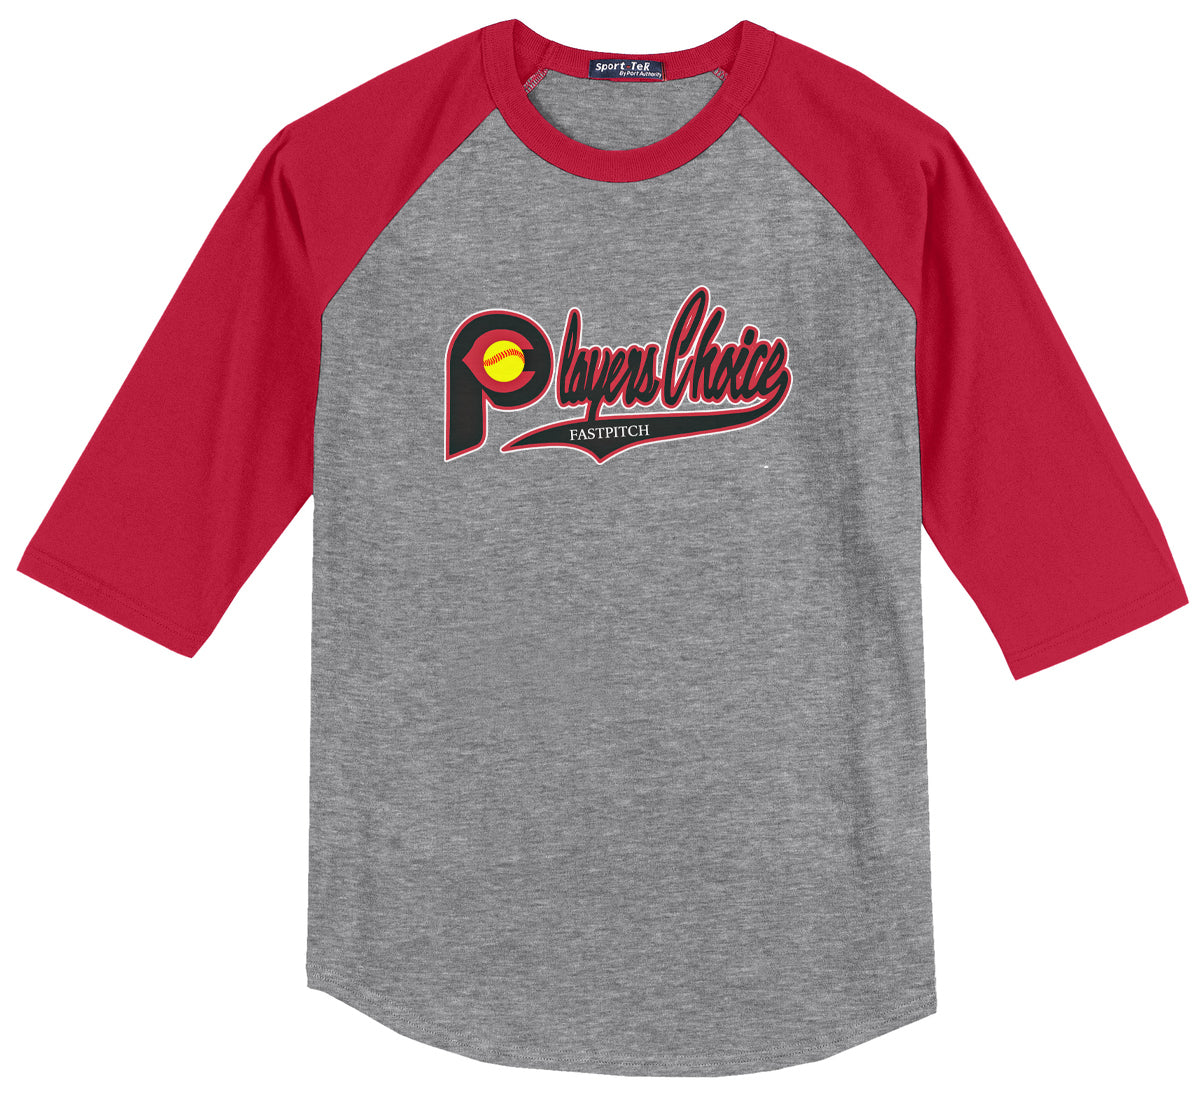 Player's Choice Academy Softball 3/4 Sleeve Baseball Shirt